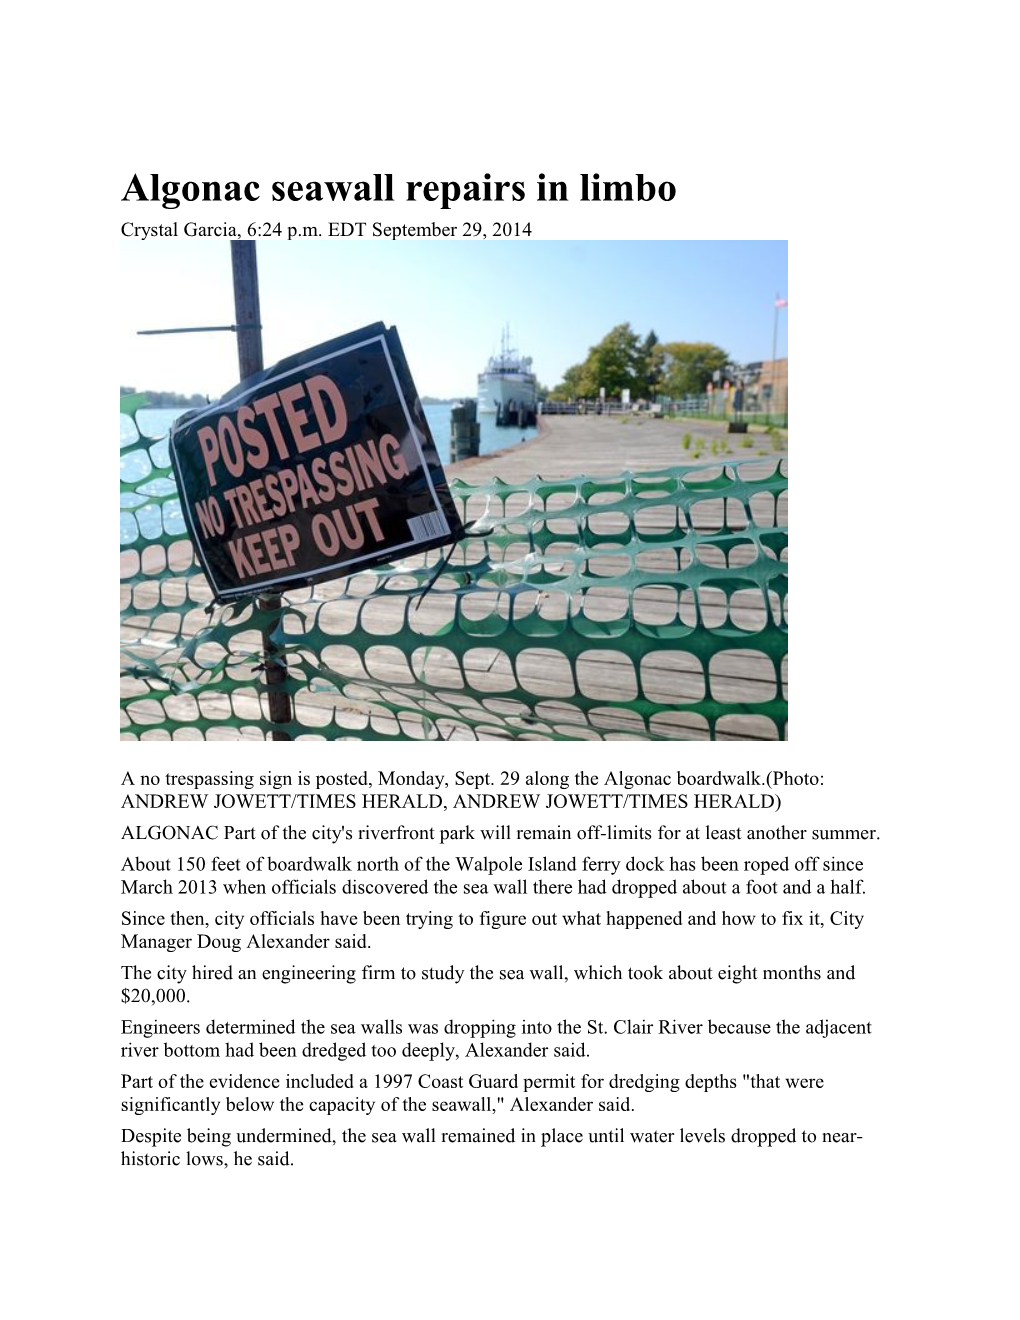 Algonac Seawall Repairs in Limbo